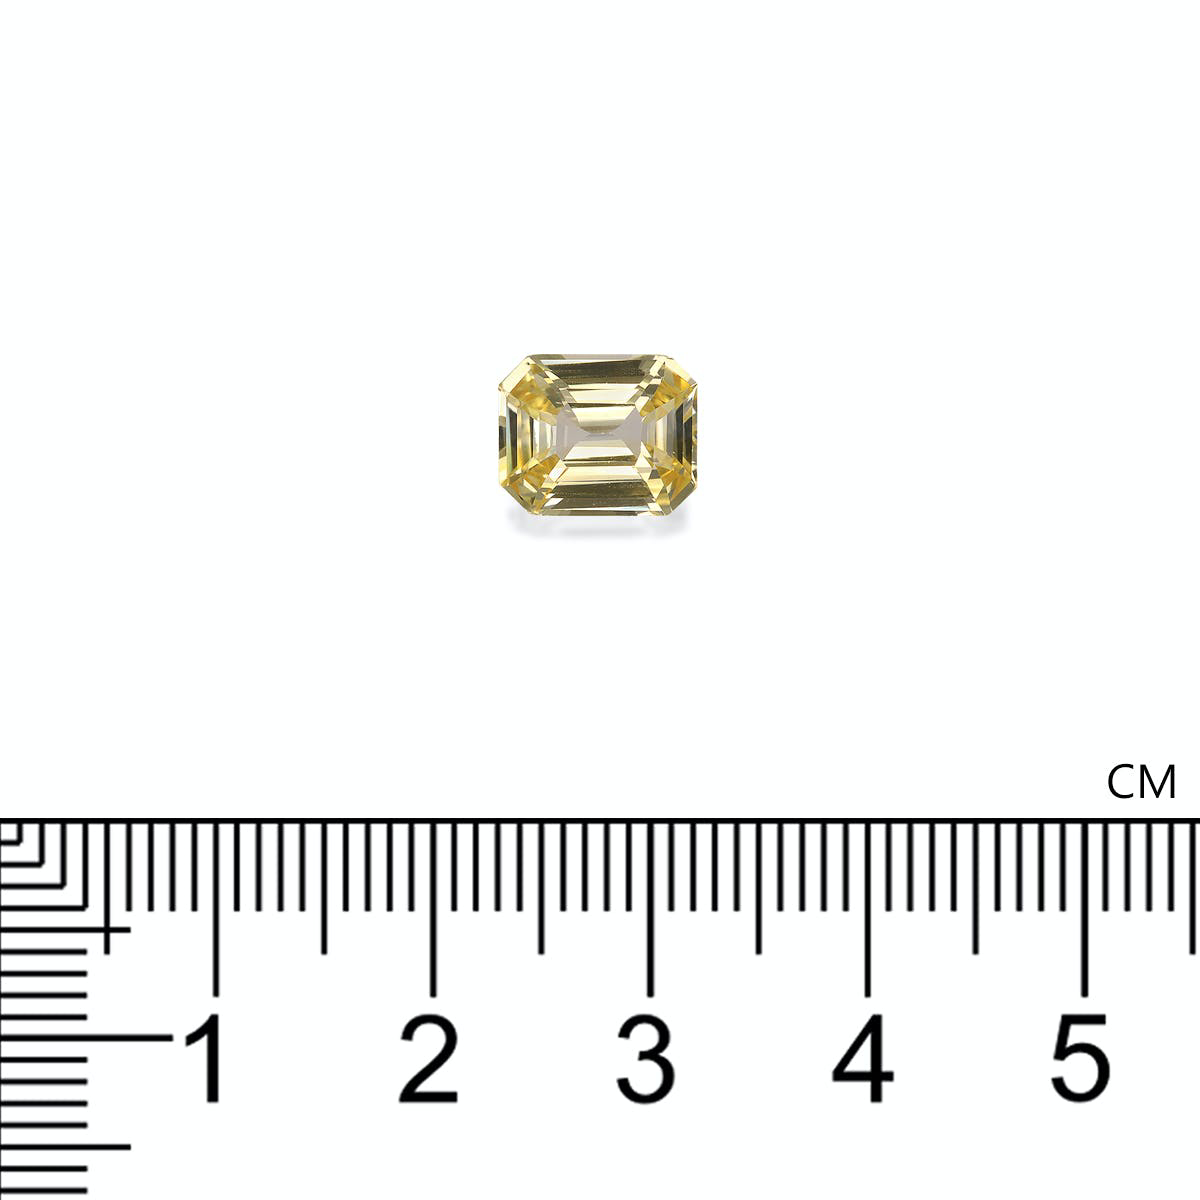 Picture of Yellow Sapphire Unheated Sri Lanka 3.06ct - 9x7mm (YS0025)